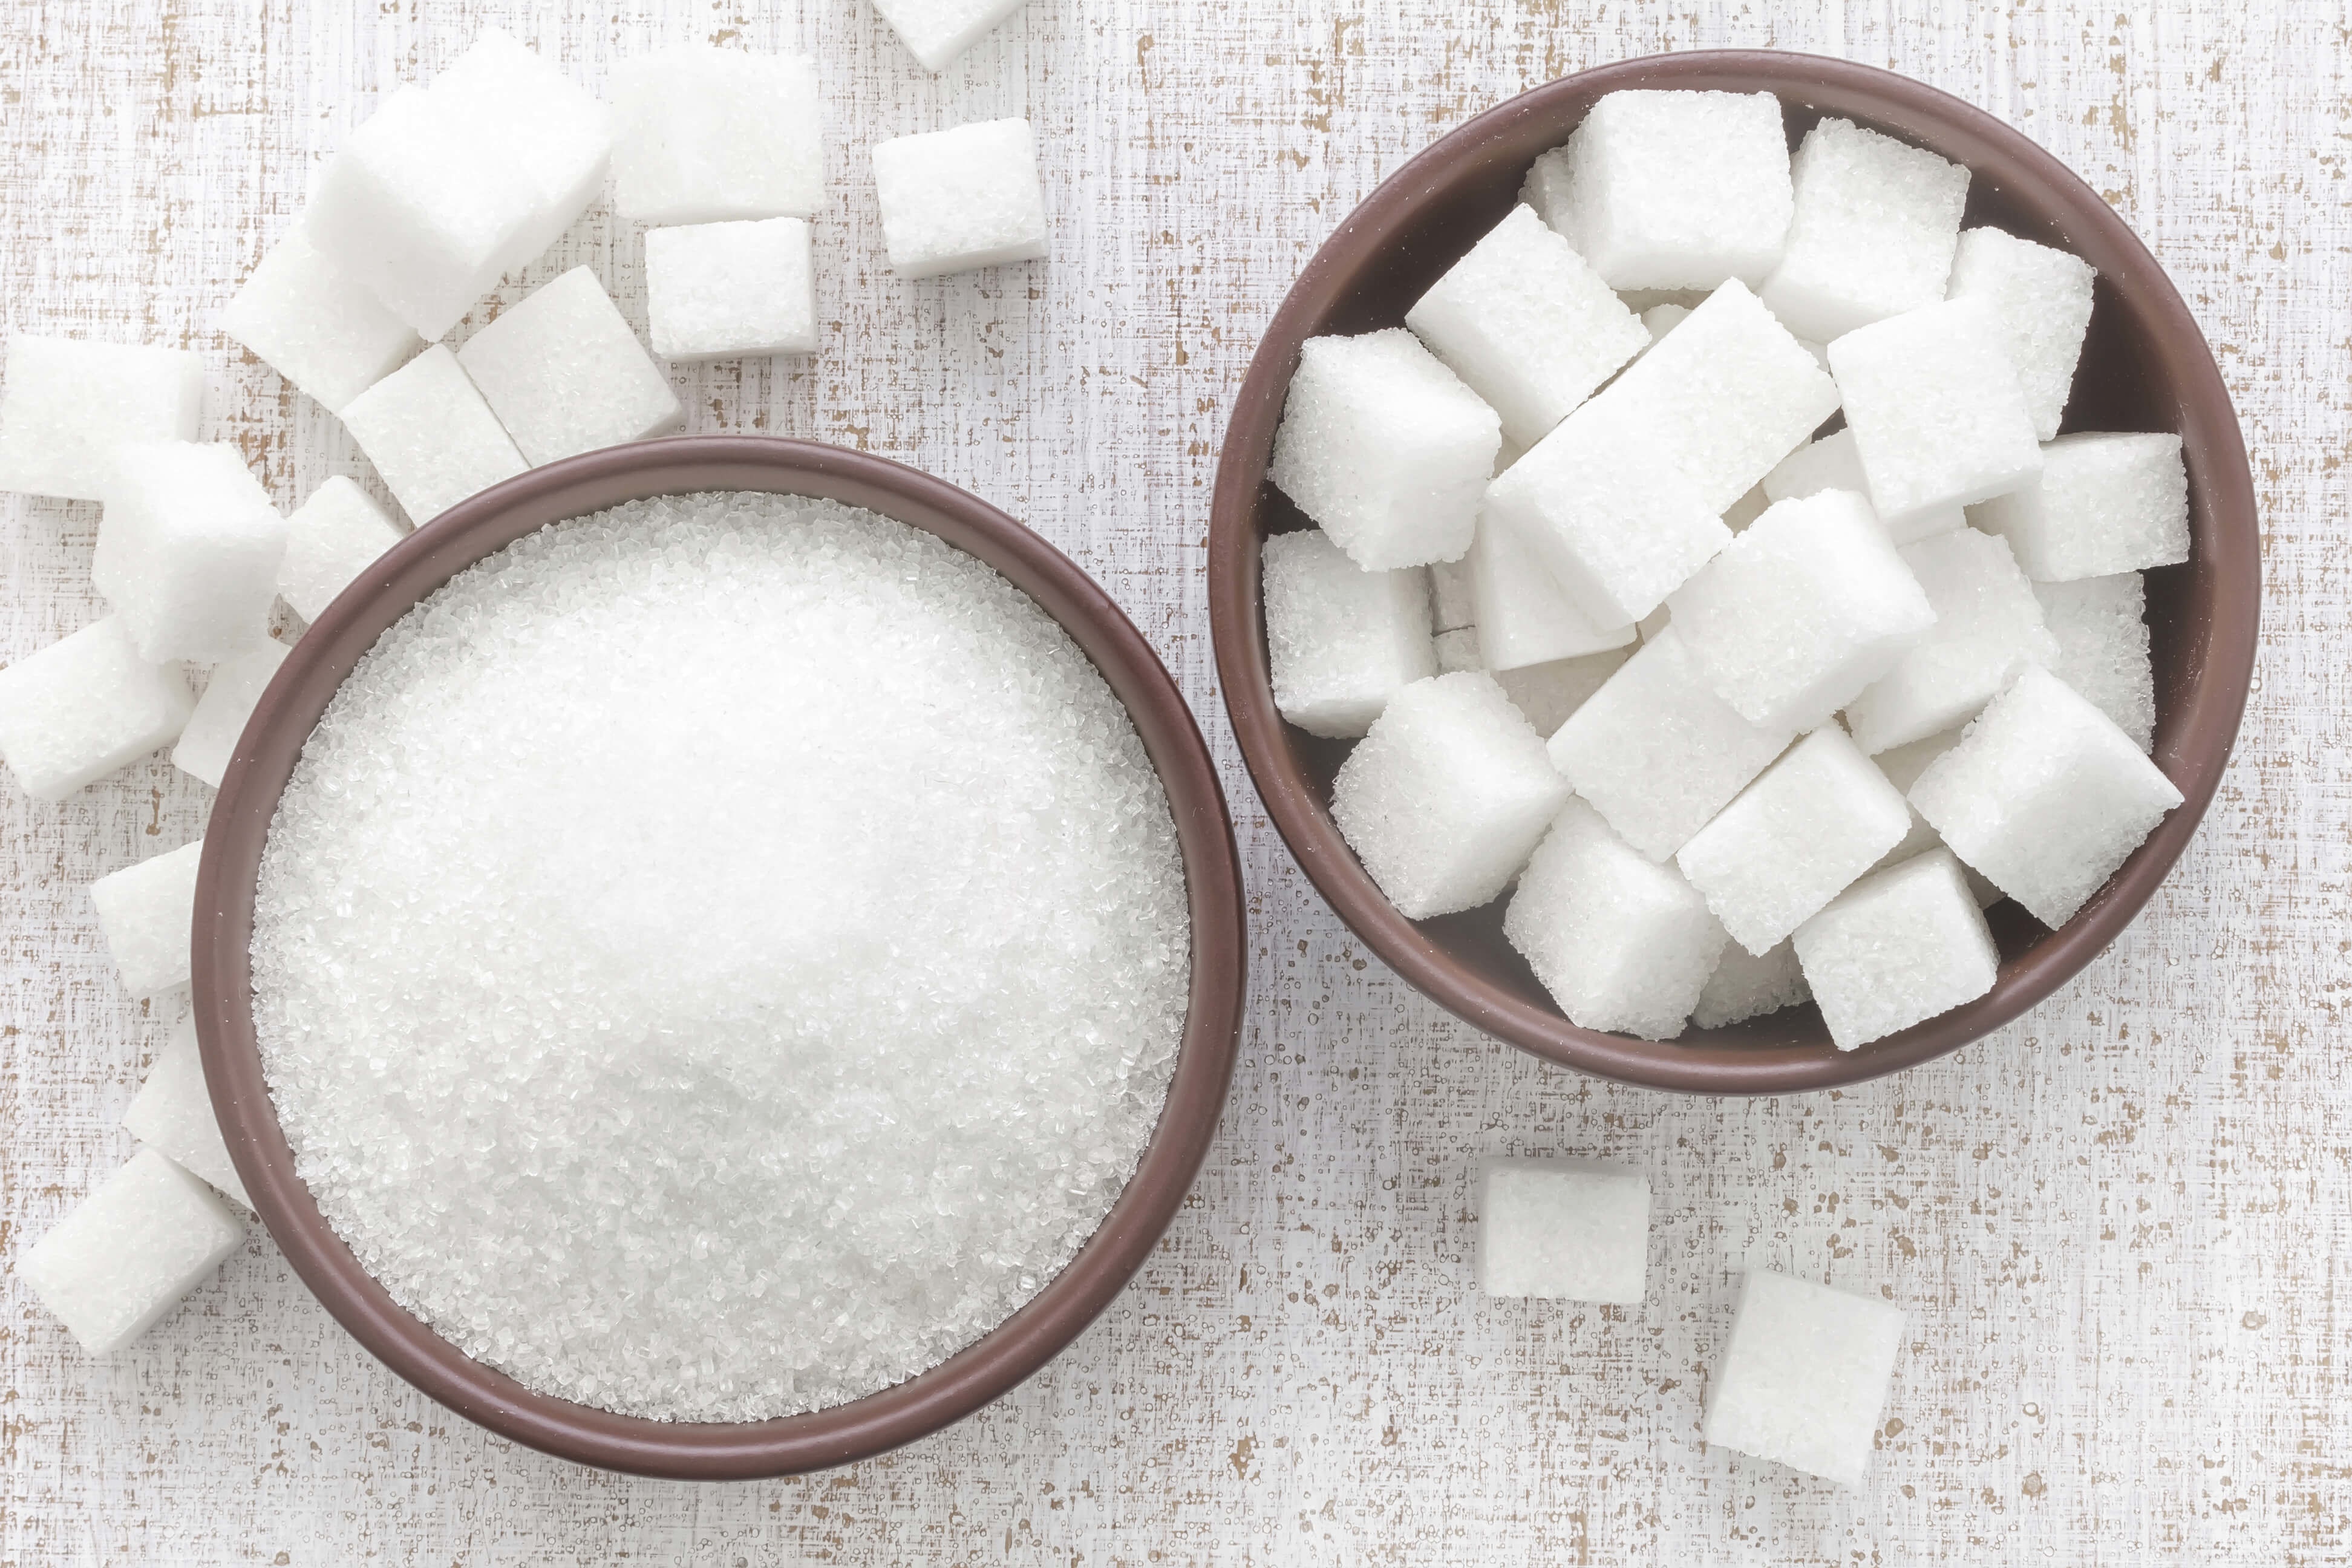 Как организм защищает нас от токсичных доз сахара?